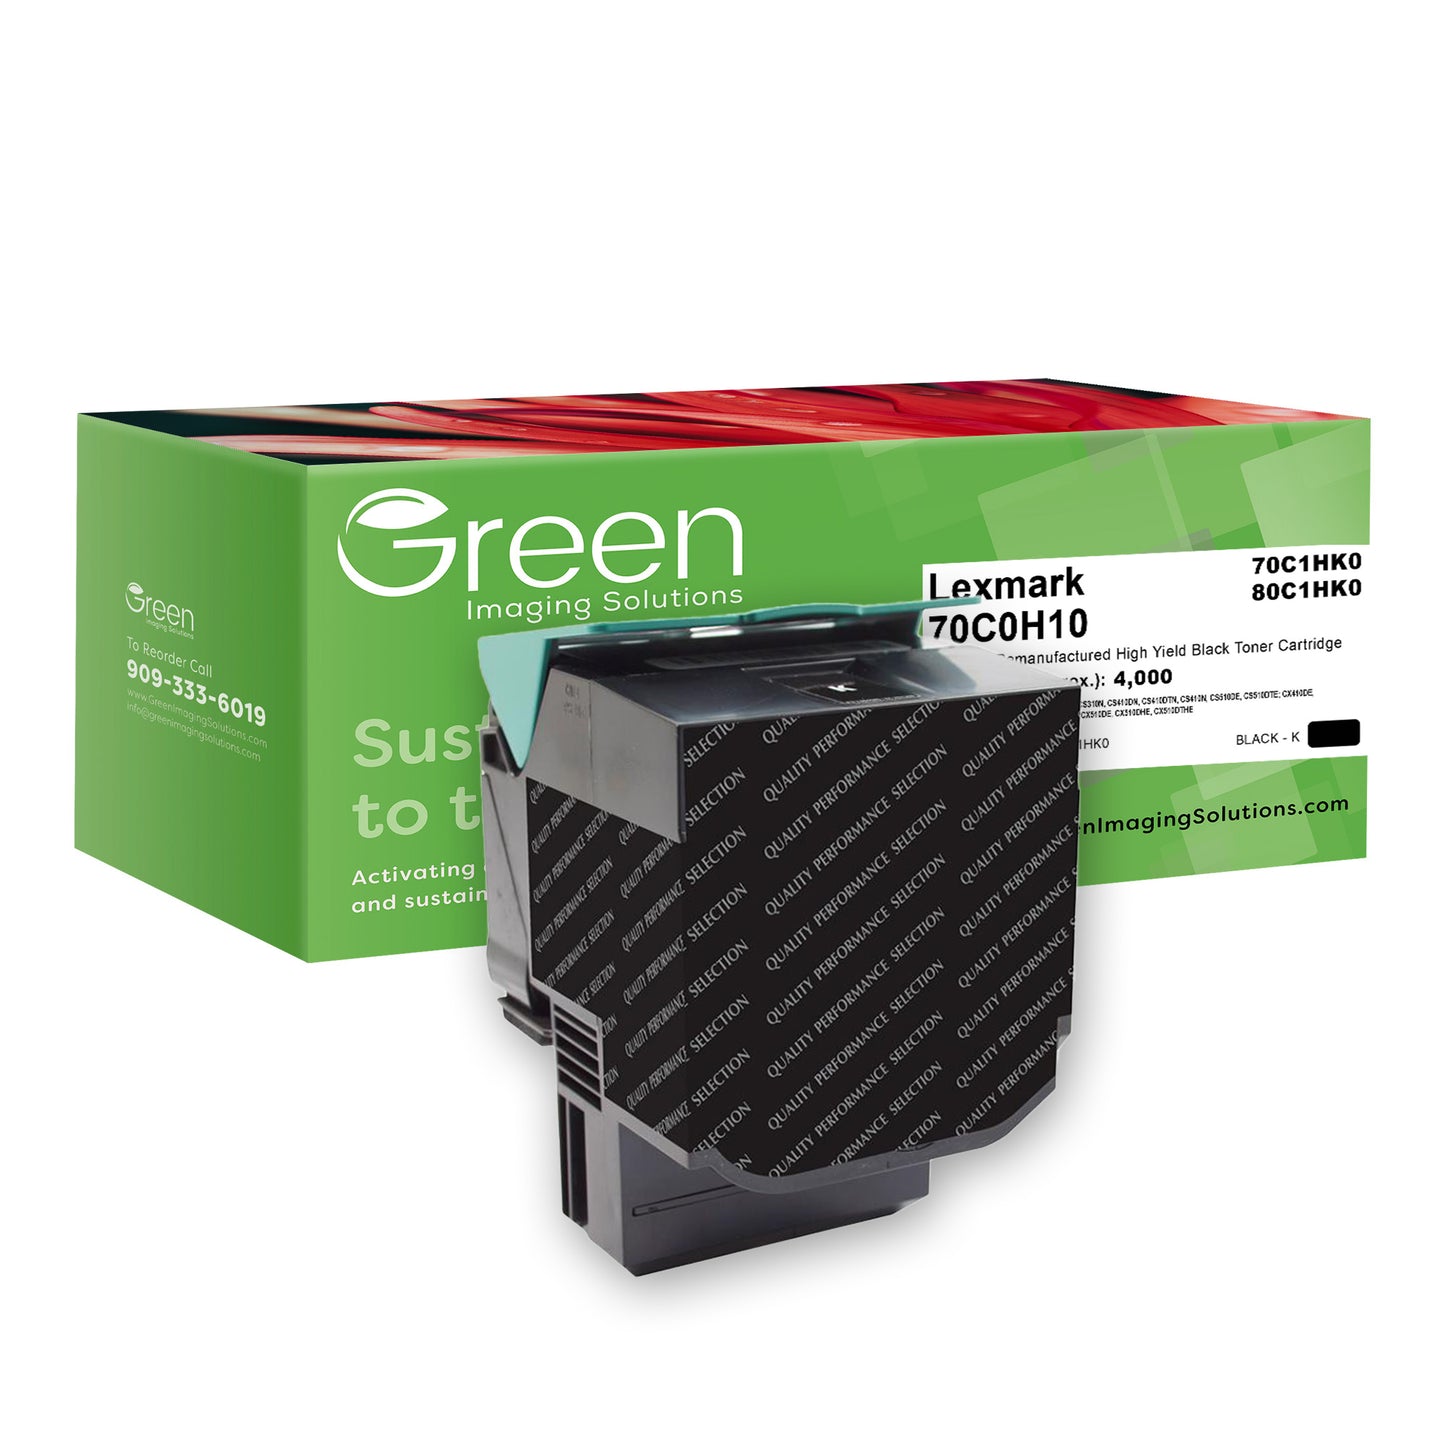 Green Imaging Solutions USA Remanufactured High Yield Black Toner Cartridge for Lexmark CS310/CS410/CS510